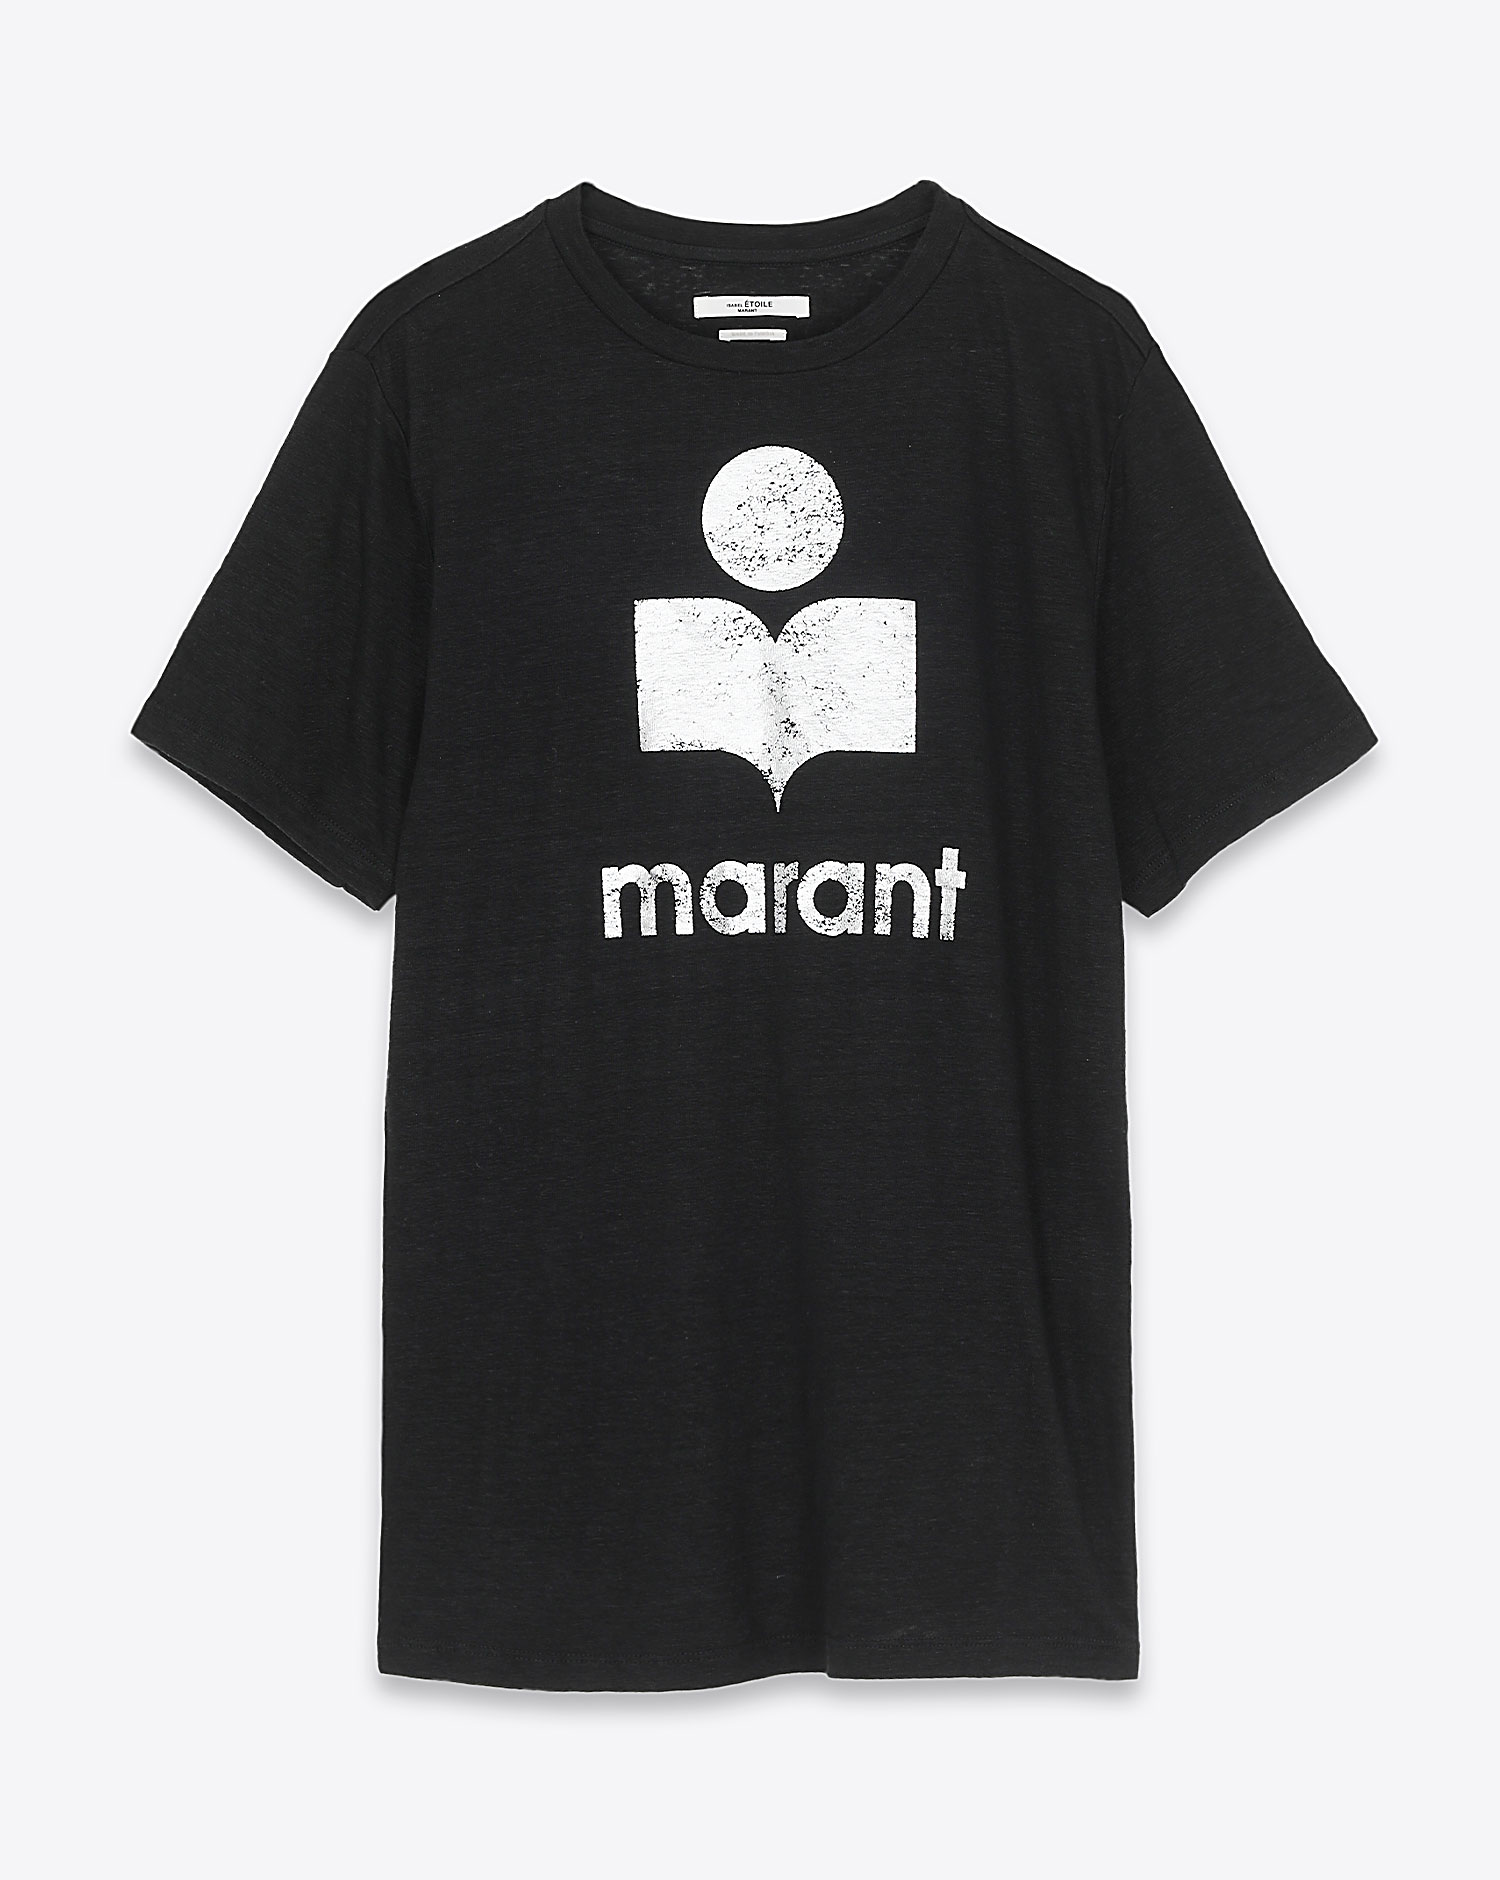 Tee-shirt en lin noir logo argent Zewel Isabel Marant Etoile. Face.